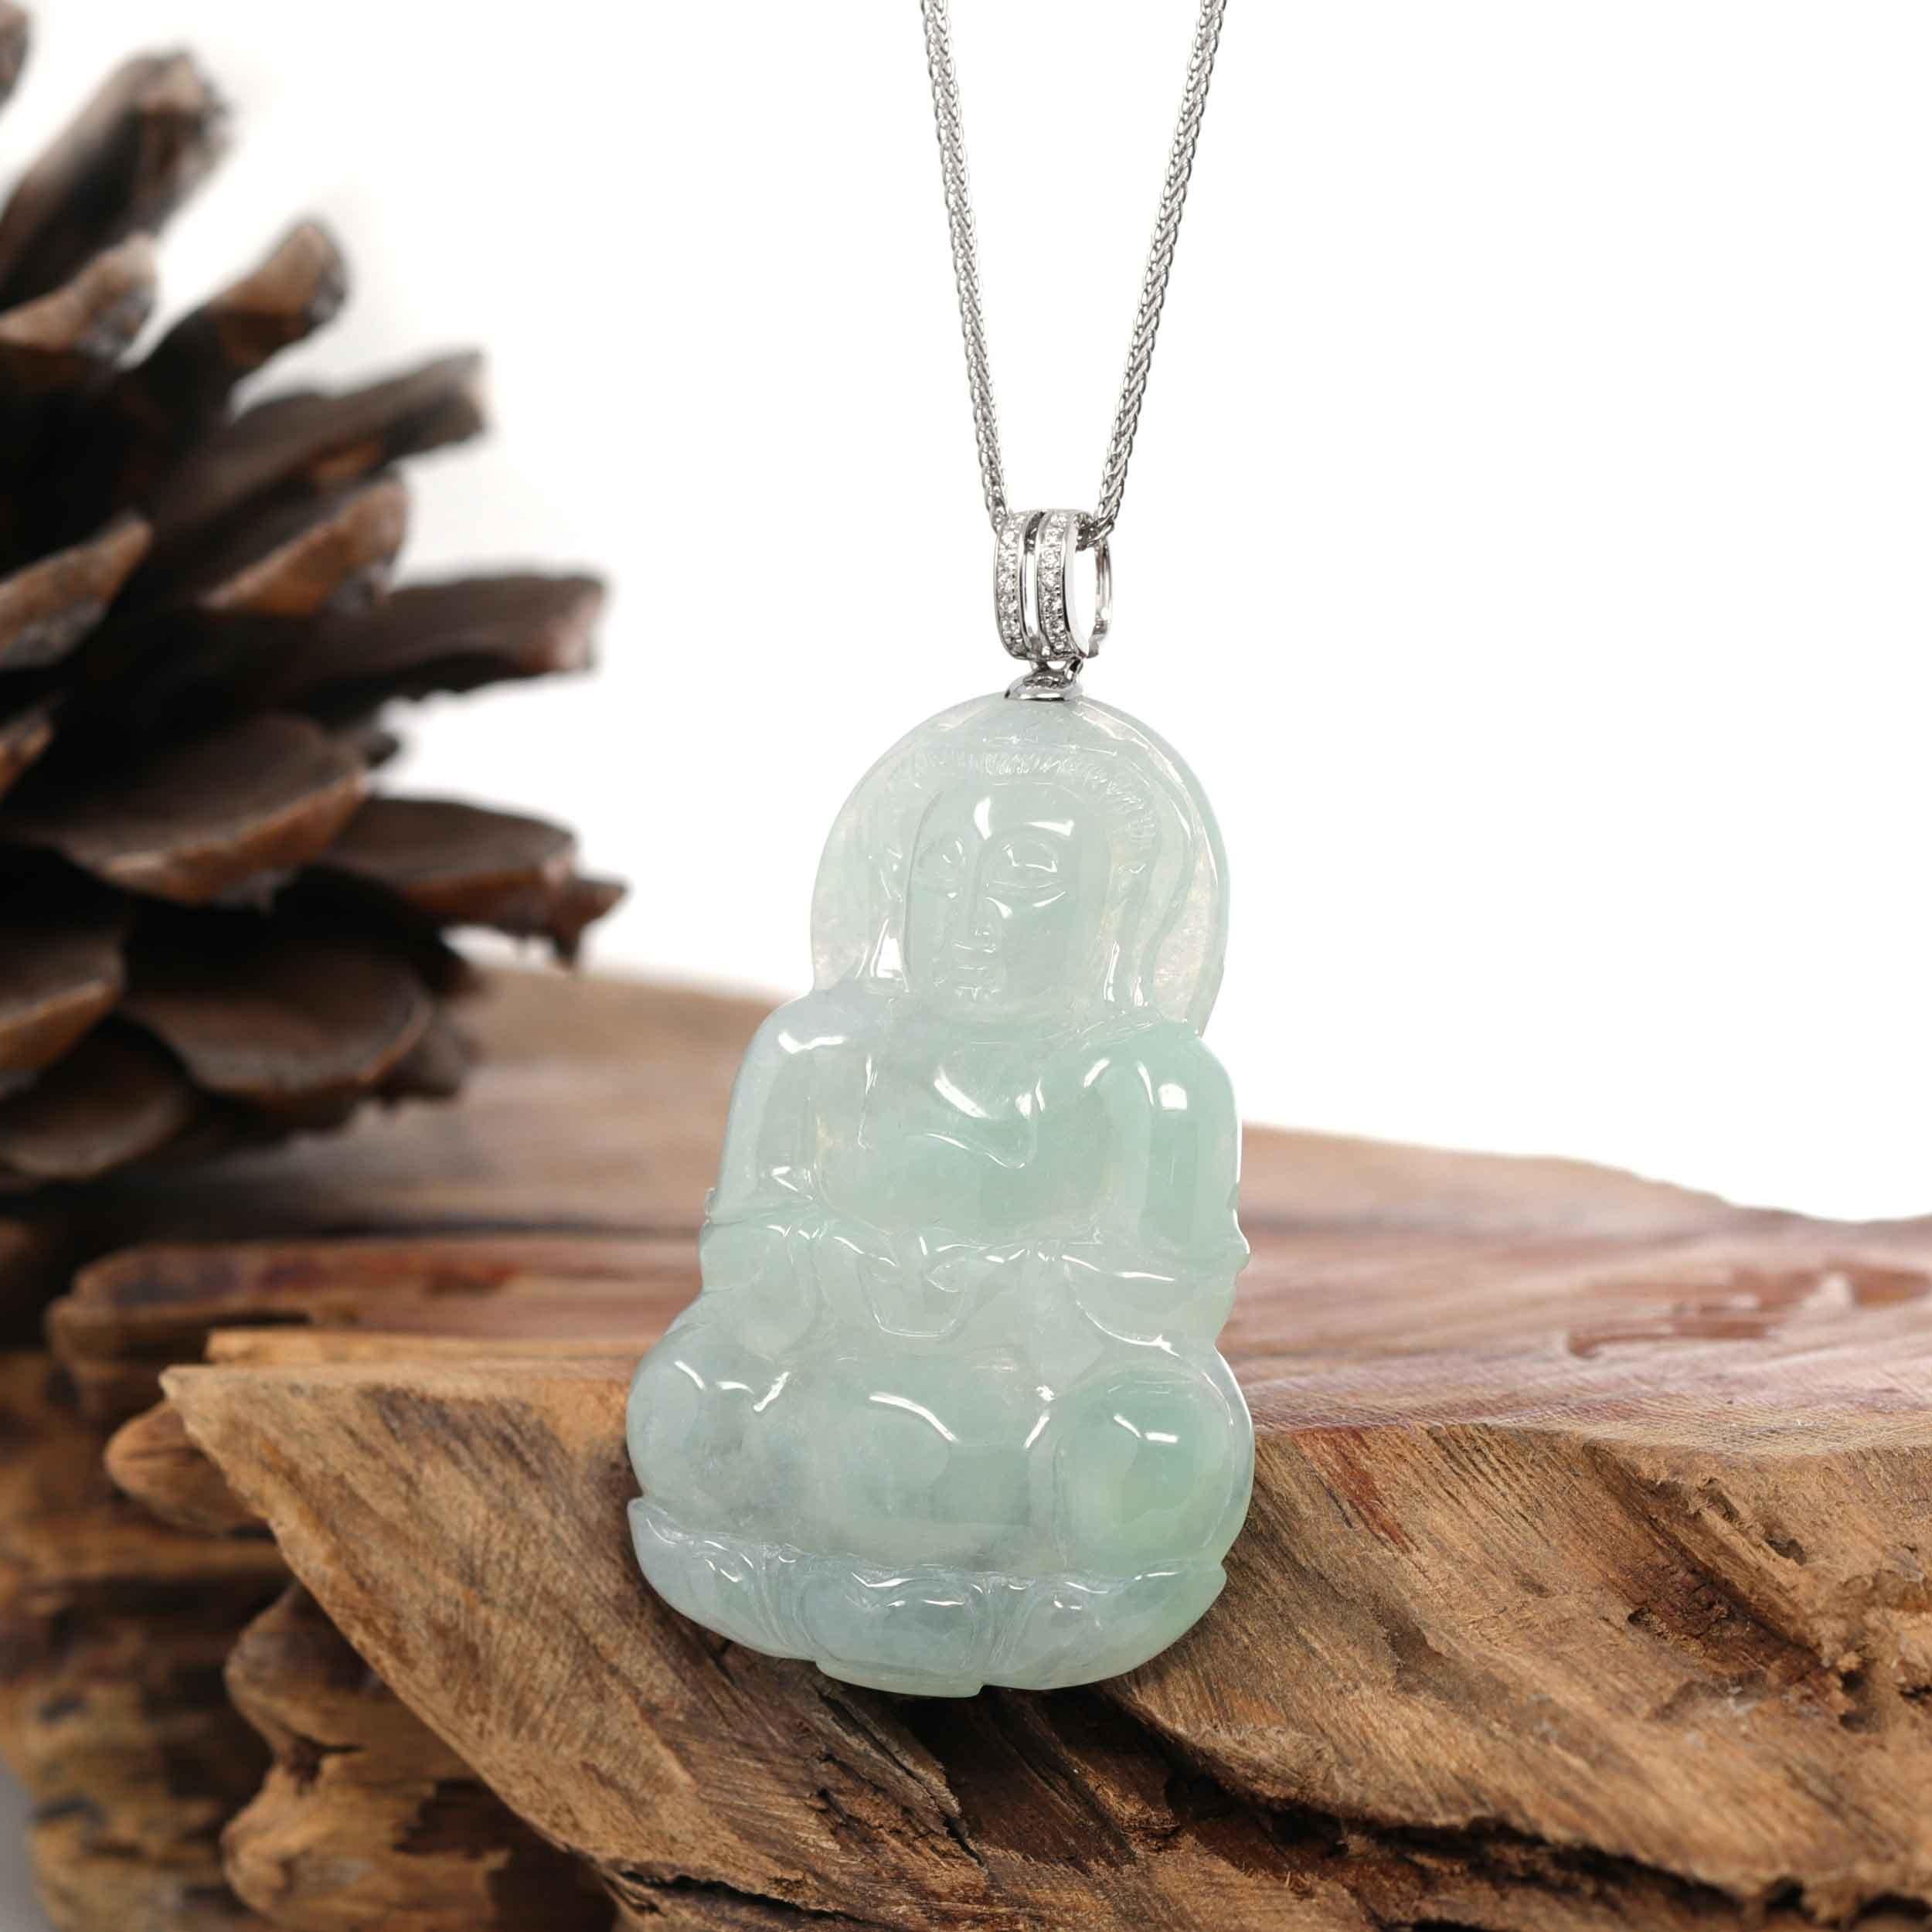 *Design concept--- Made with genuine Burmese jadeite jade. The excellent craftsmanship portrays the 